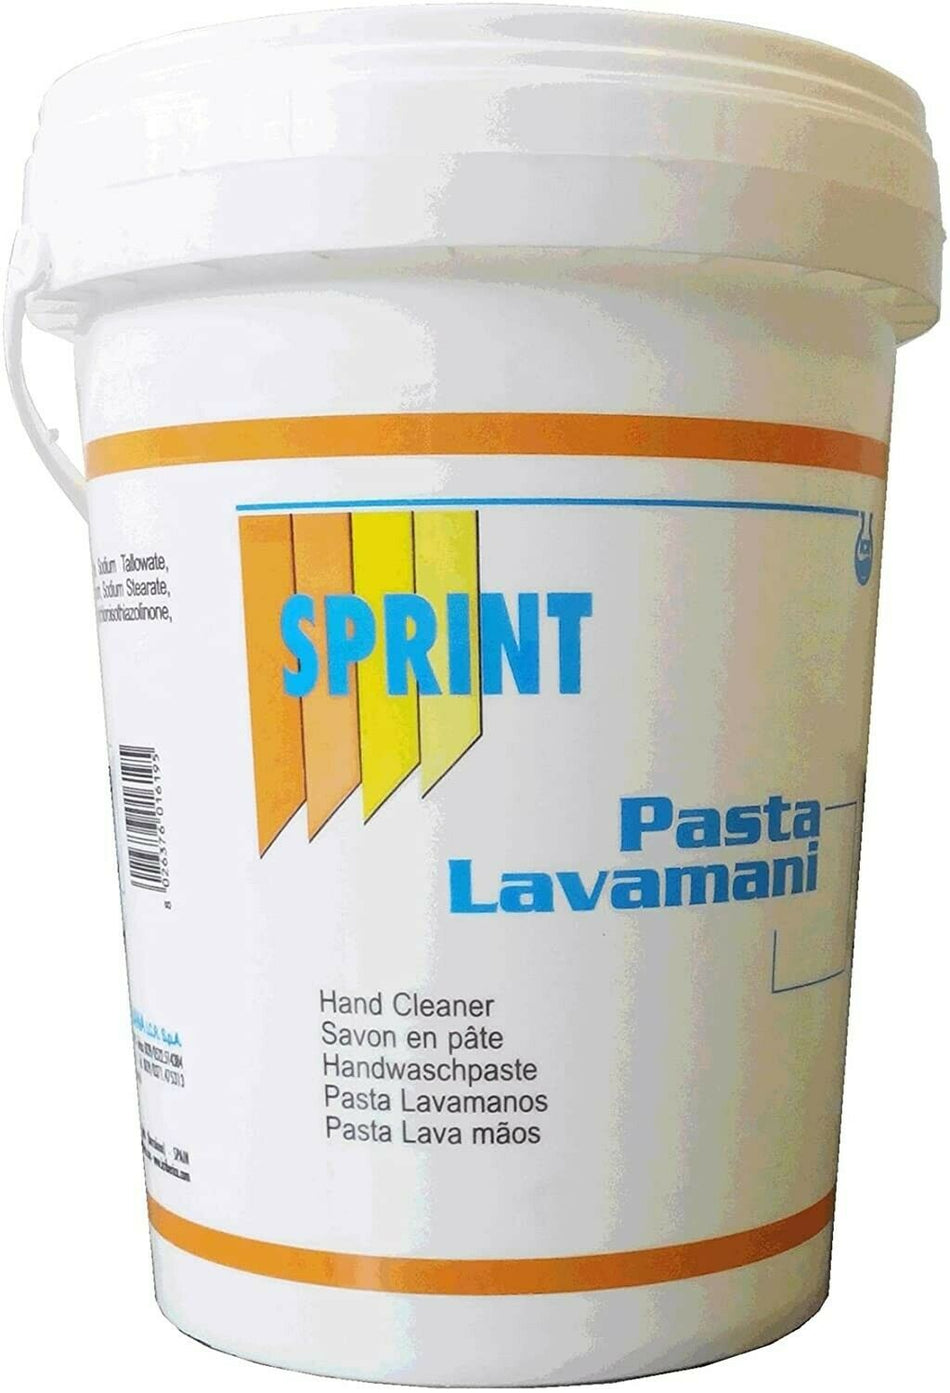 Sprint New Generation Pasta Lavamanos Hand Cleaning Paste 4kg Tub